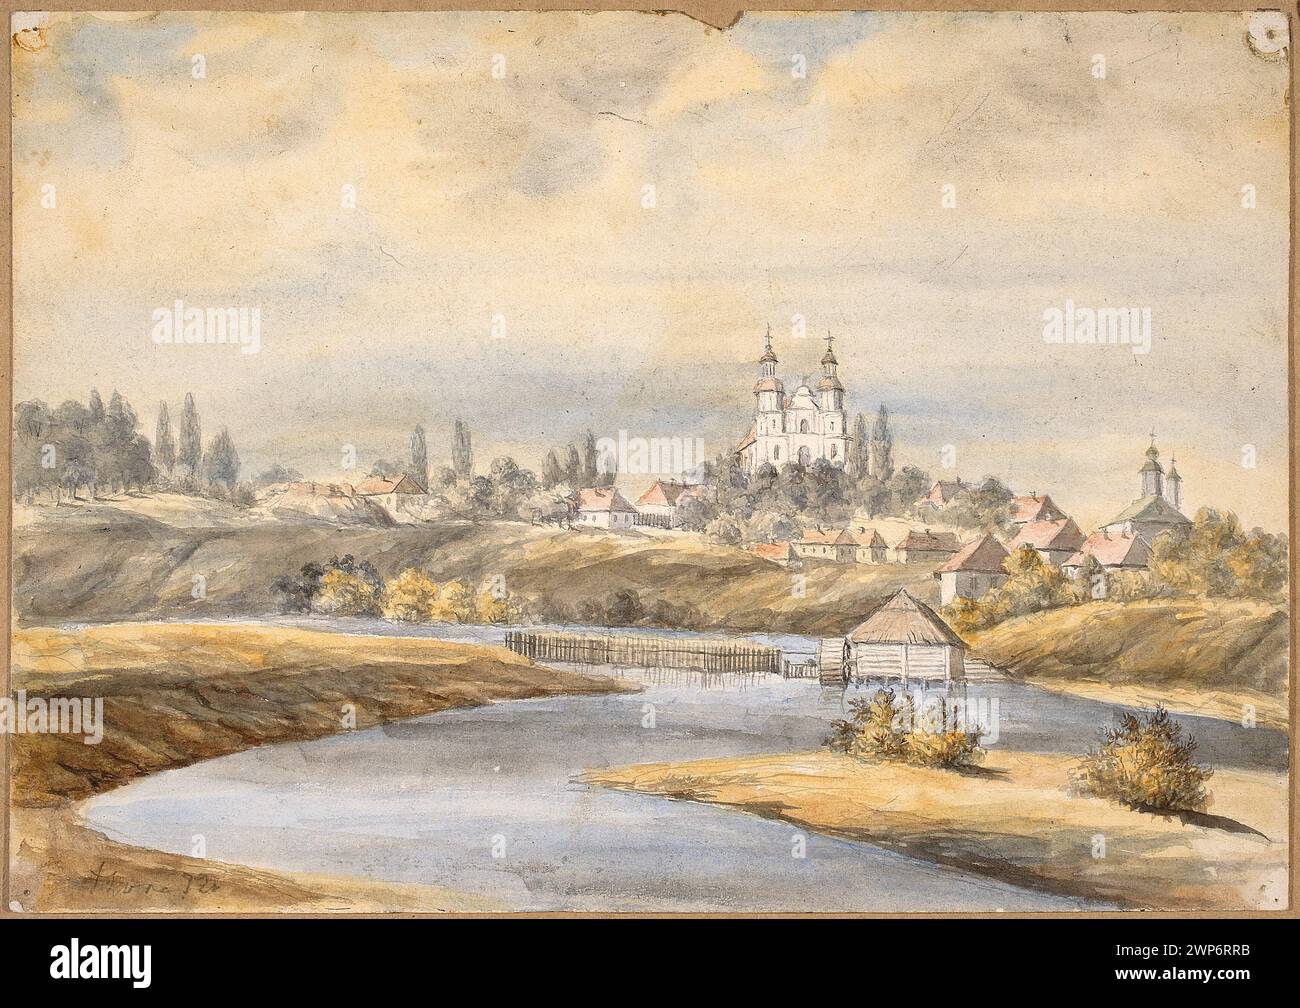 View of Horod On the Bug; Orda, Napoleon (1807-1883); around 1880 (1875-00-00-1885-00-00);Bug (river), Horodło (Lubelskie Voivodeship), Smolikowski, Seweryn (1809-1897), Smolikowski, Seweryn (1809-1897)-collections, Smolikowski, Seweryn (1850-1920), Smolikowski, Seweryn (1850-1920)- Collection, architecture, baroque (archite.), Baroque (style), churches (archite. Stock Photo